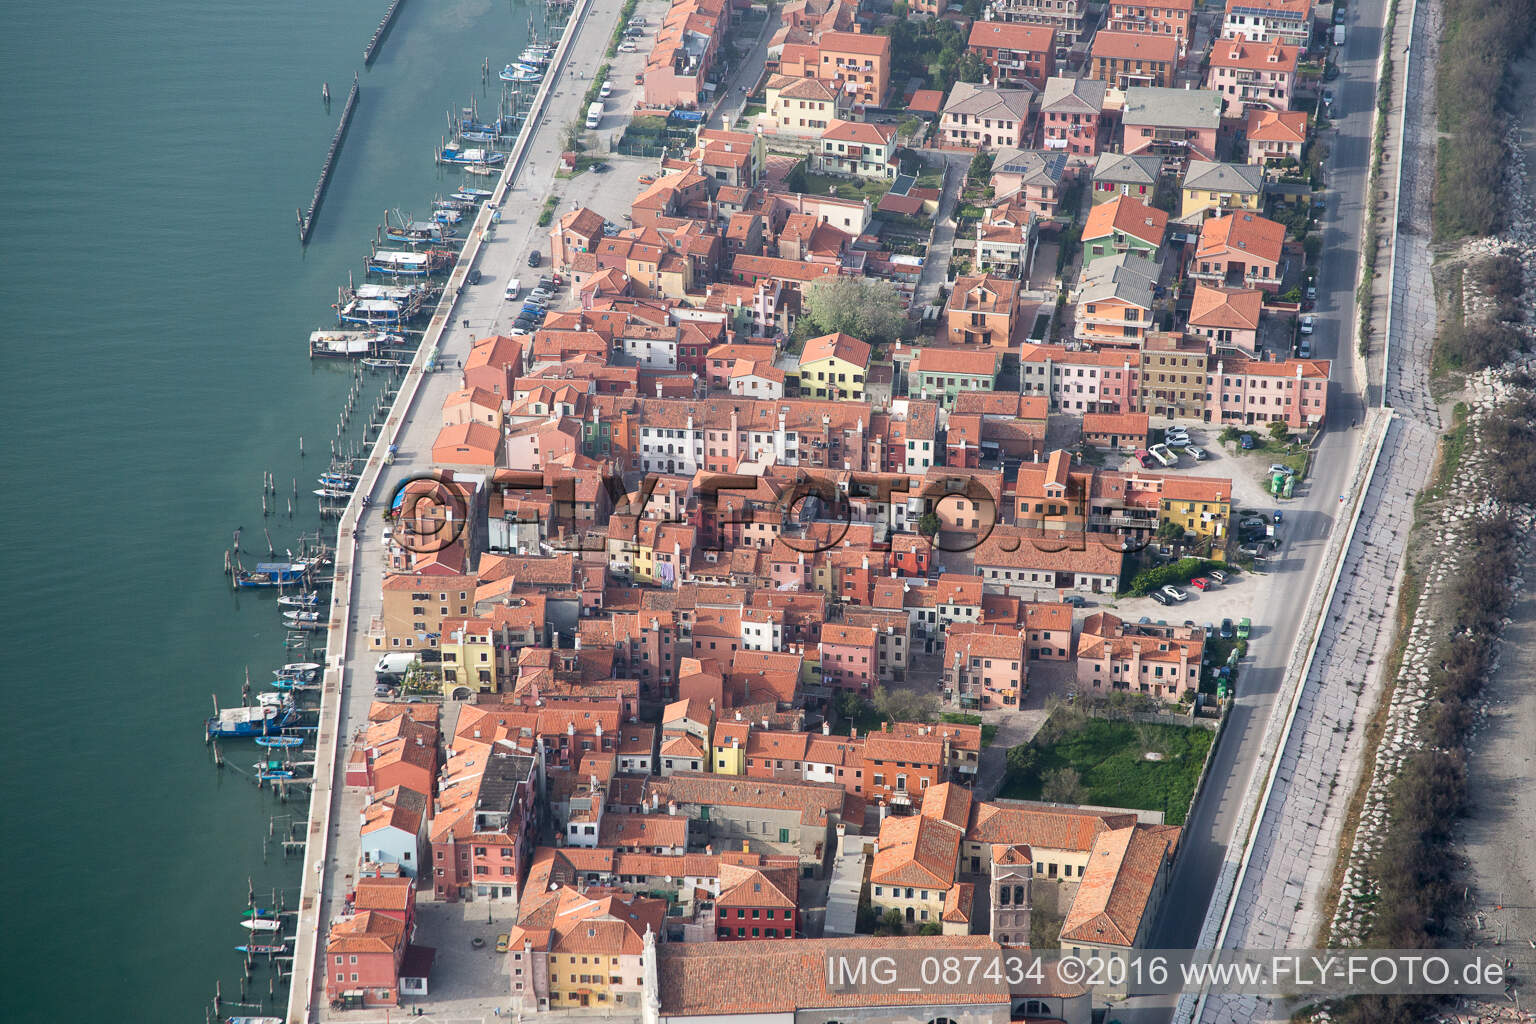 Settlement area in the district Pellestrina in Venedig in Venetien, Italy from above